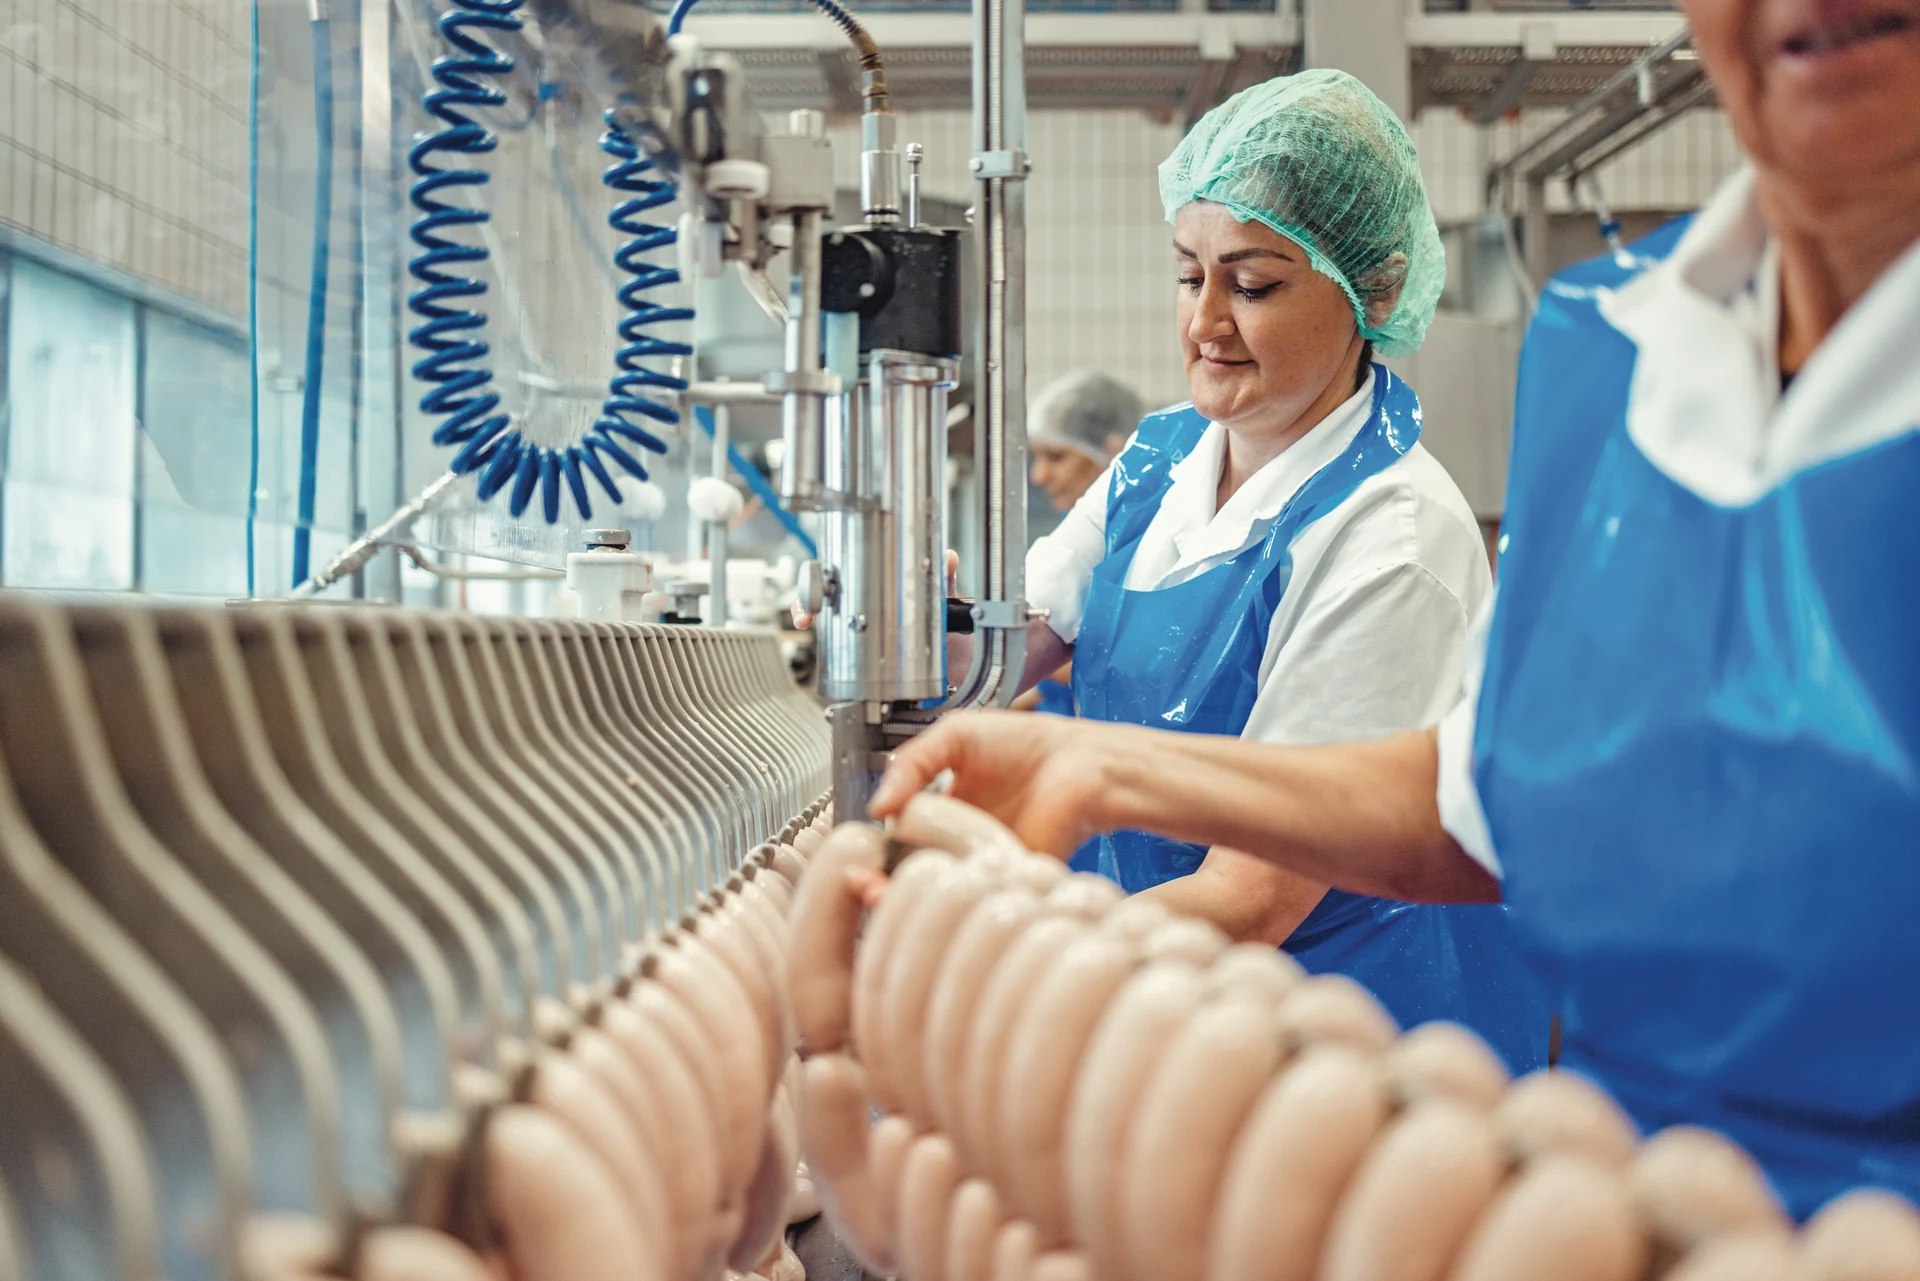 Rusmina Bruderer in the Micarna sausage factory